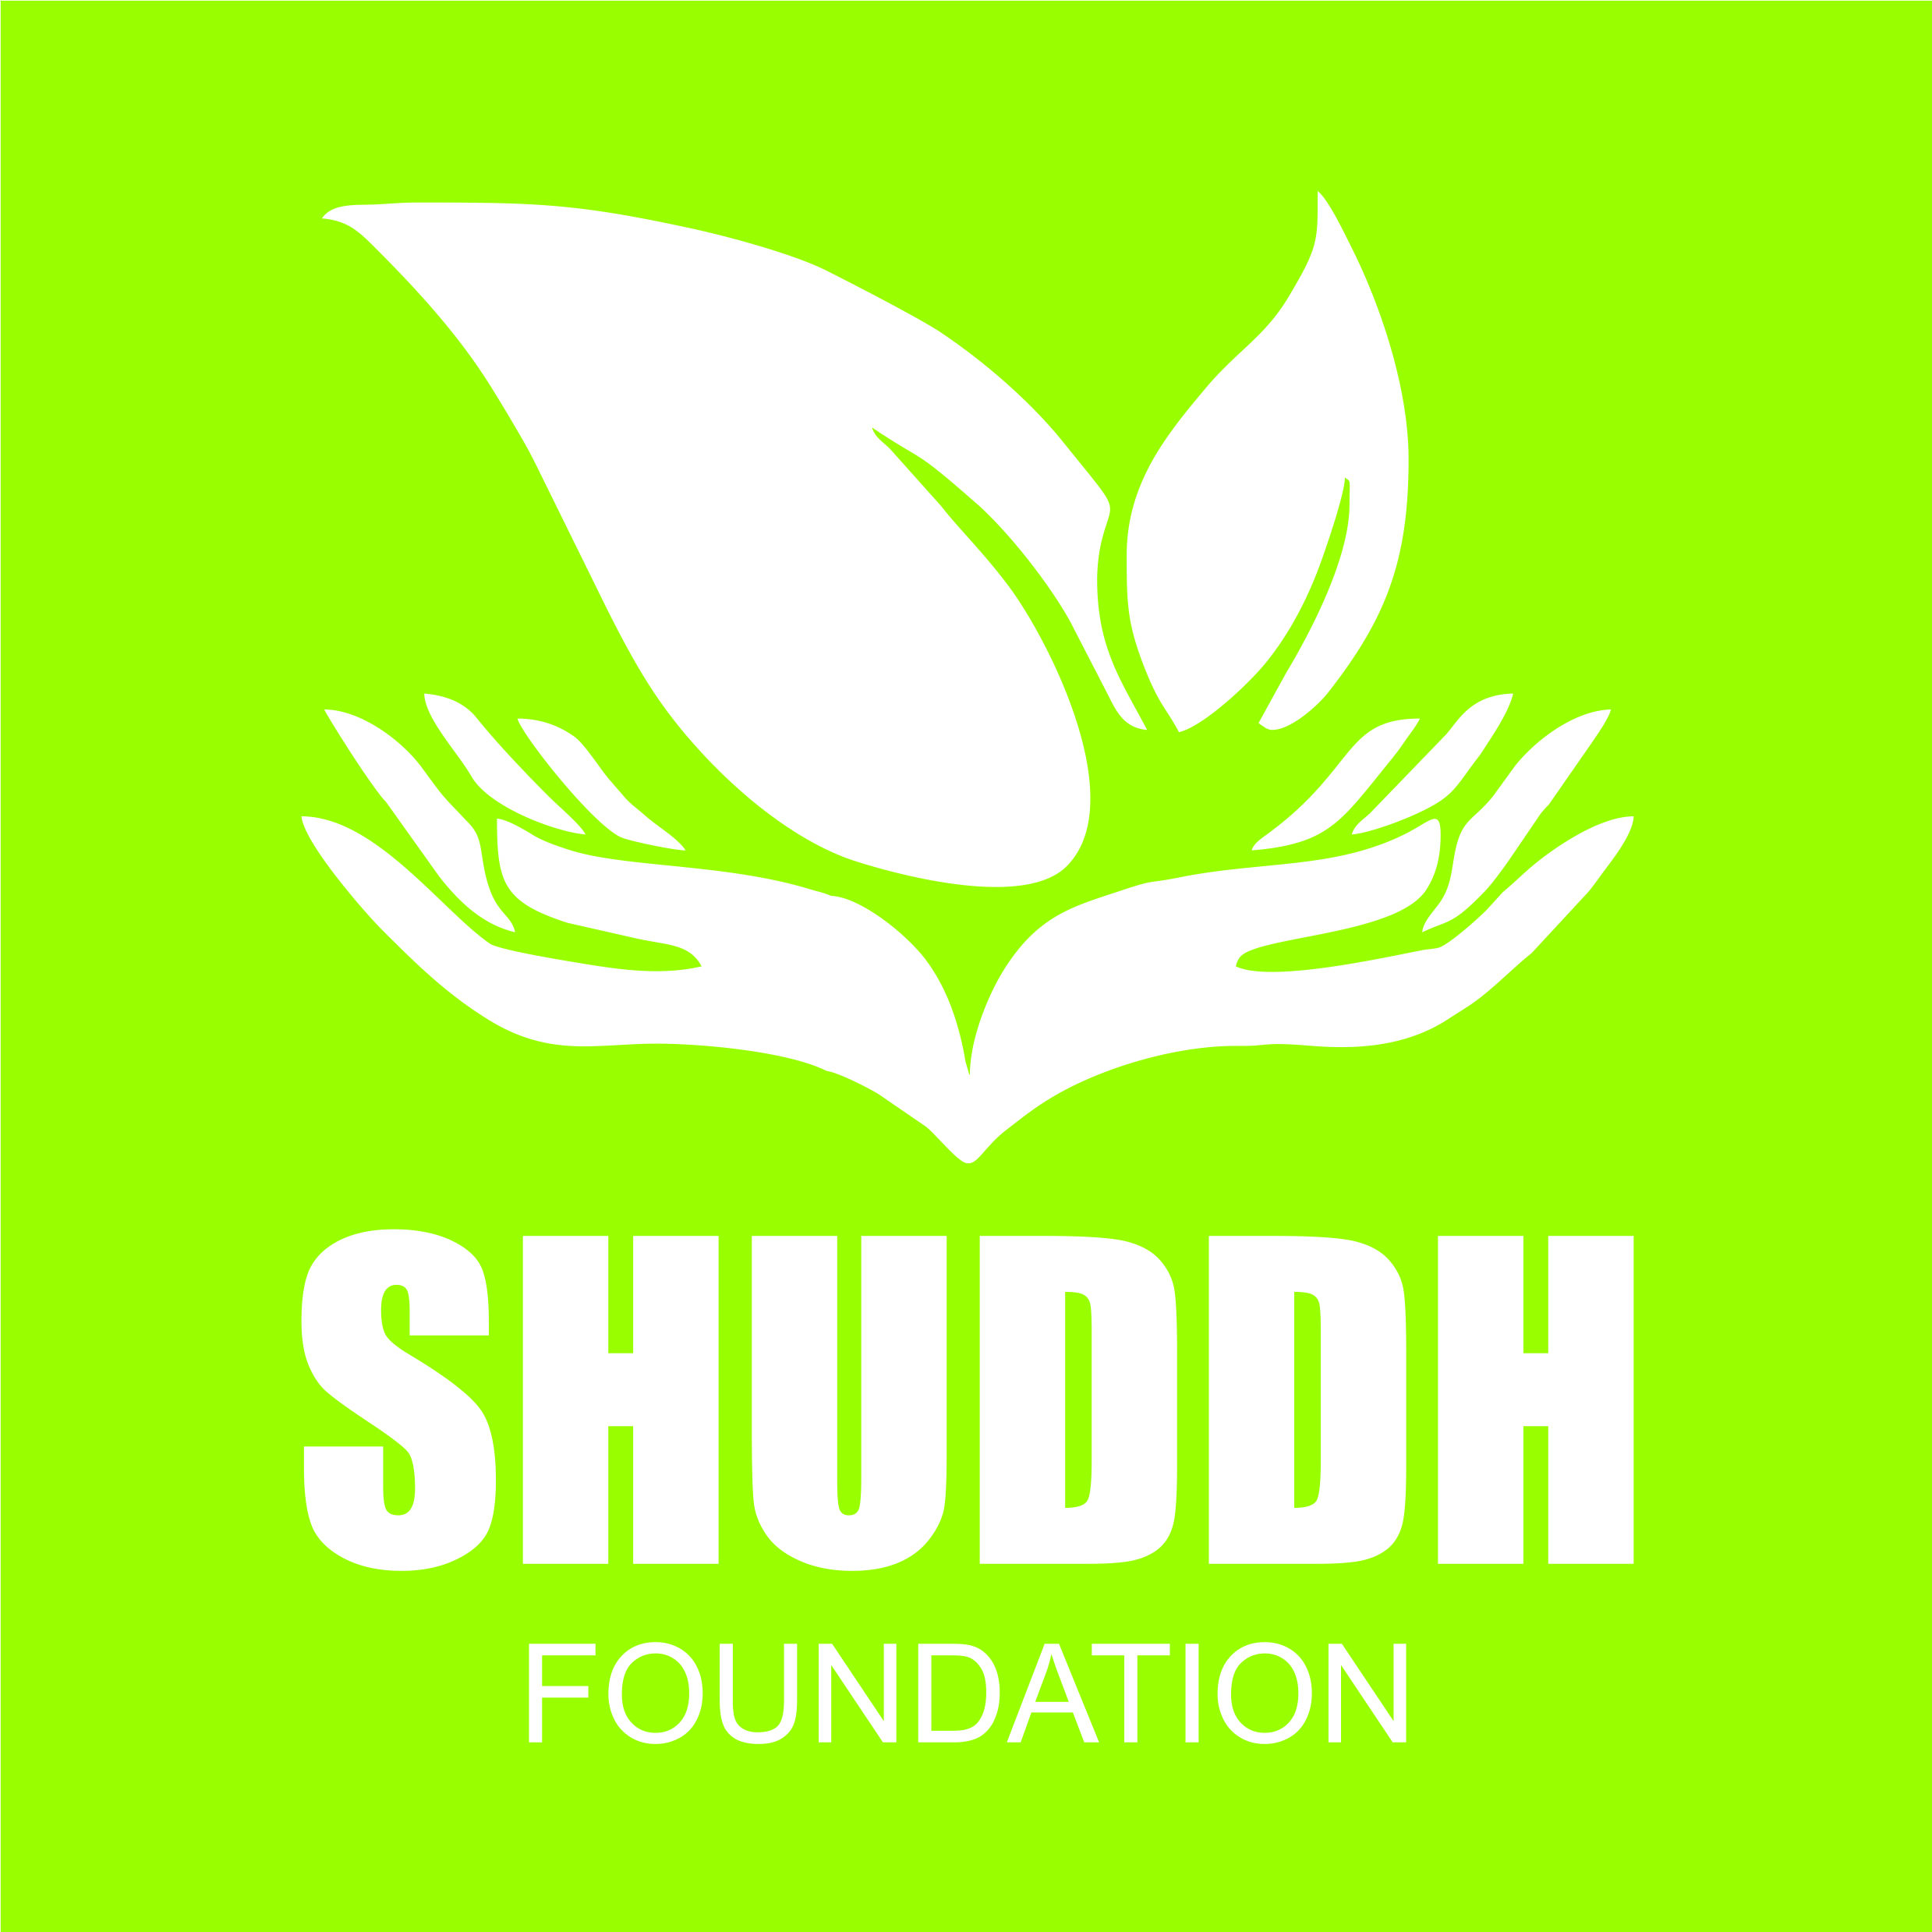 Shuddh Foundation